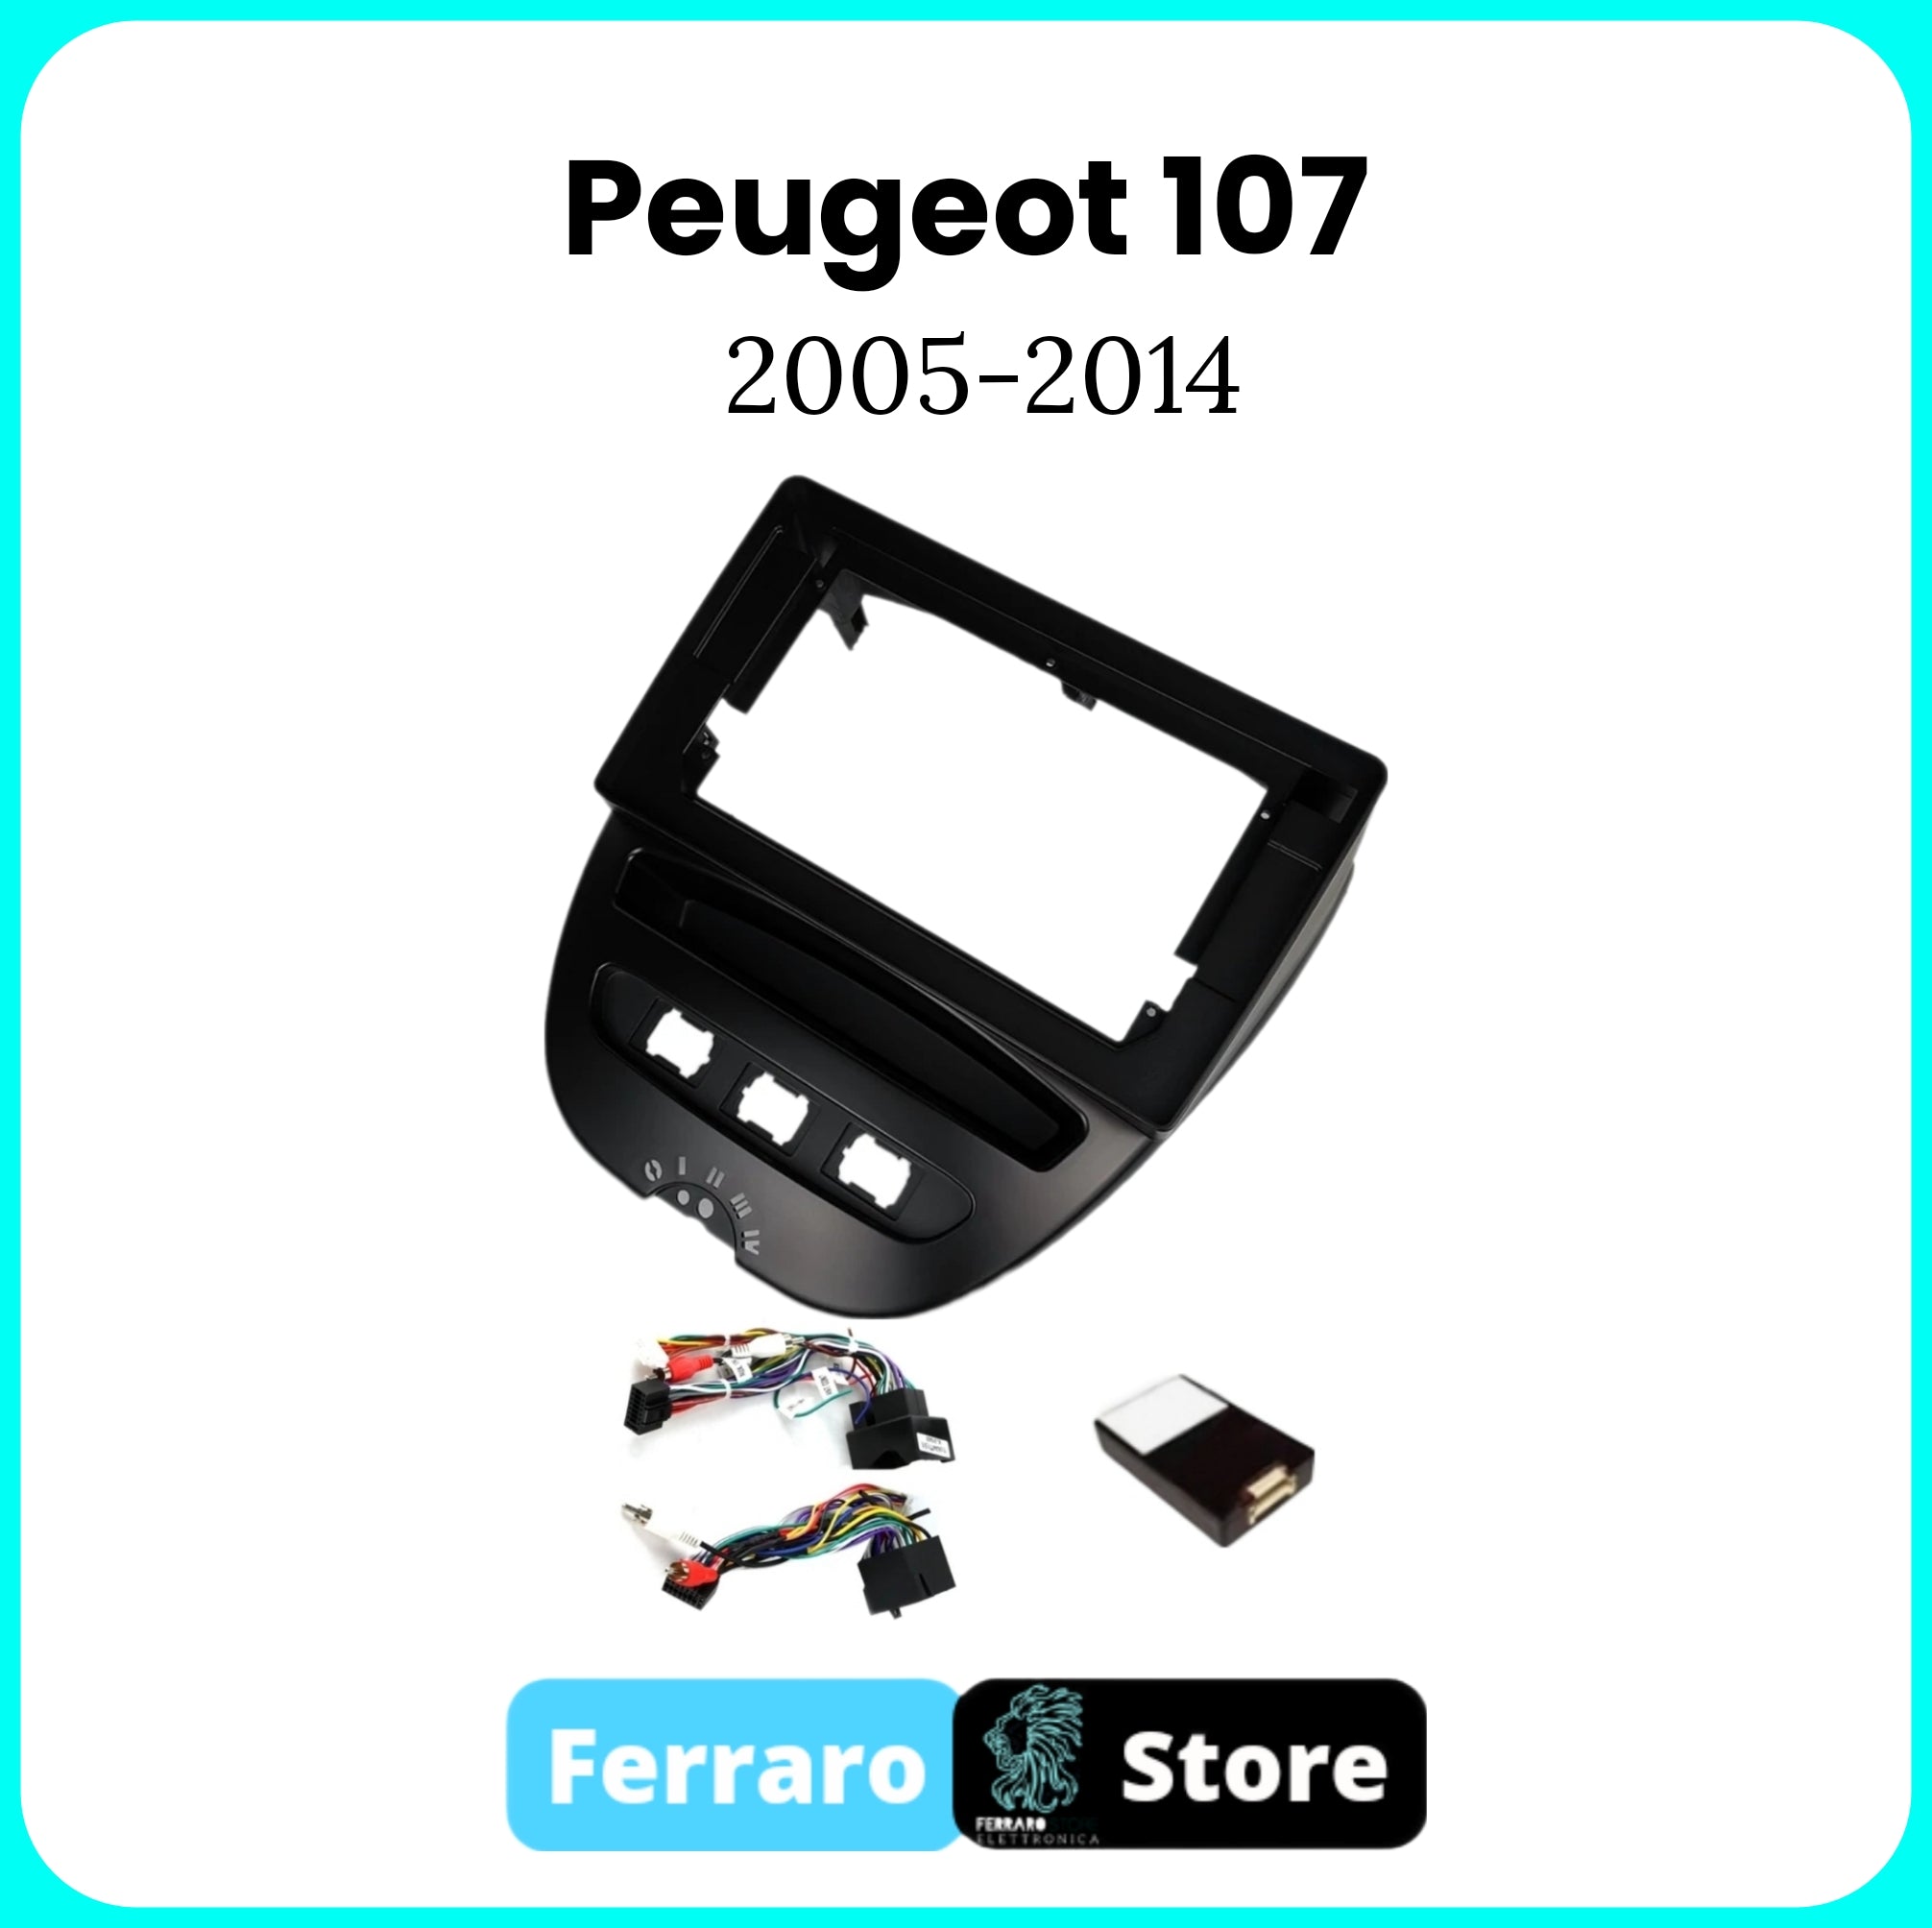 Kit Montaggio Autoradio 10.1"Pollici per Peugeot 107 [2005 - 2014] - Mascherina, Cablaggio Autoradio Android